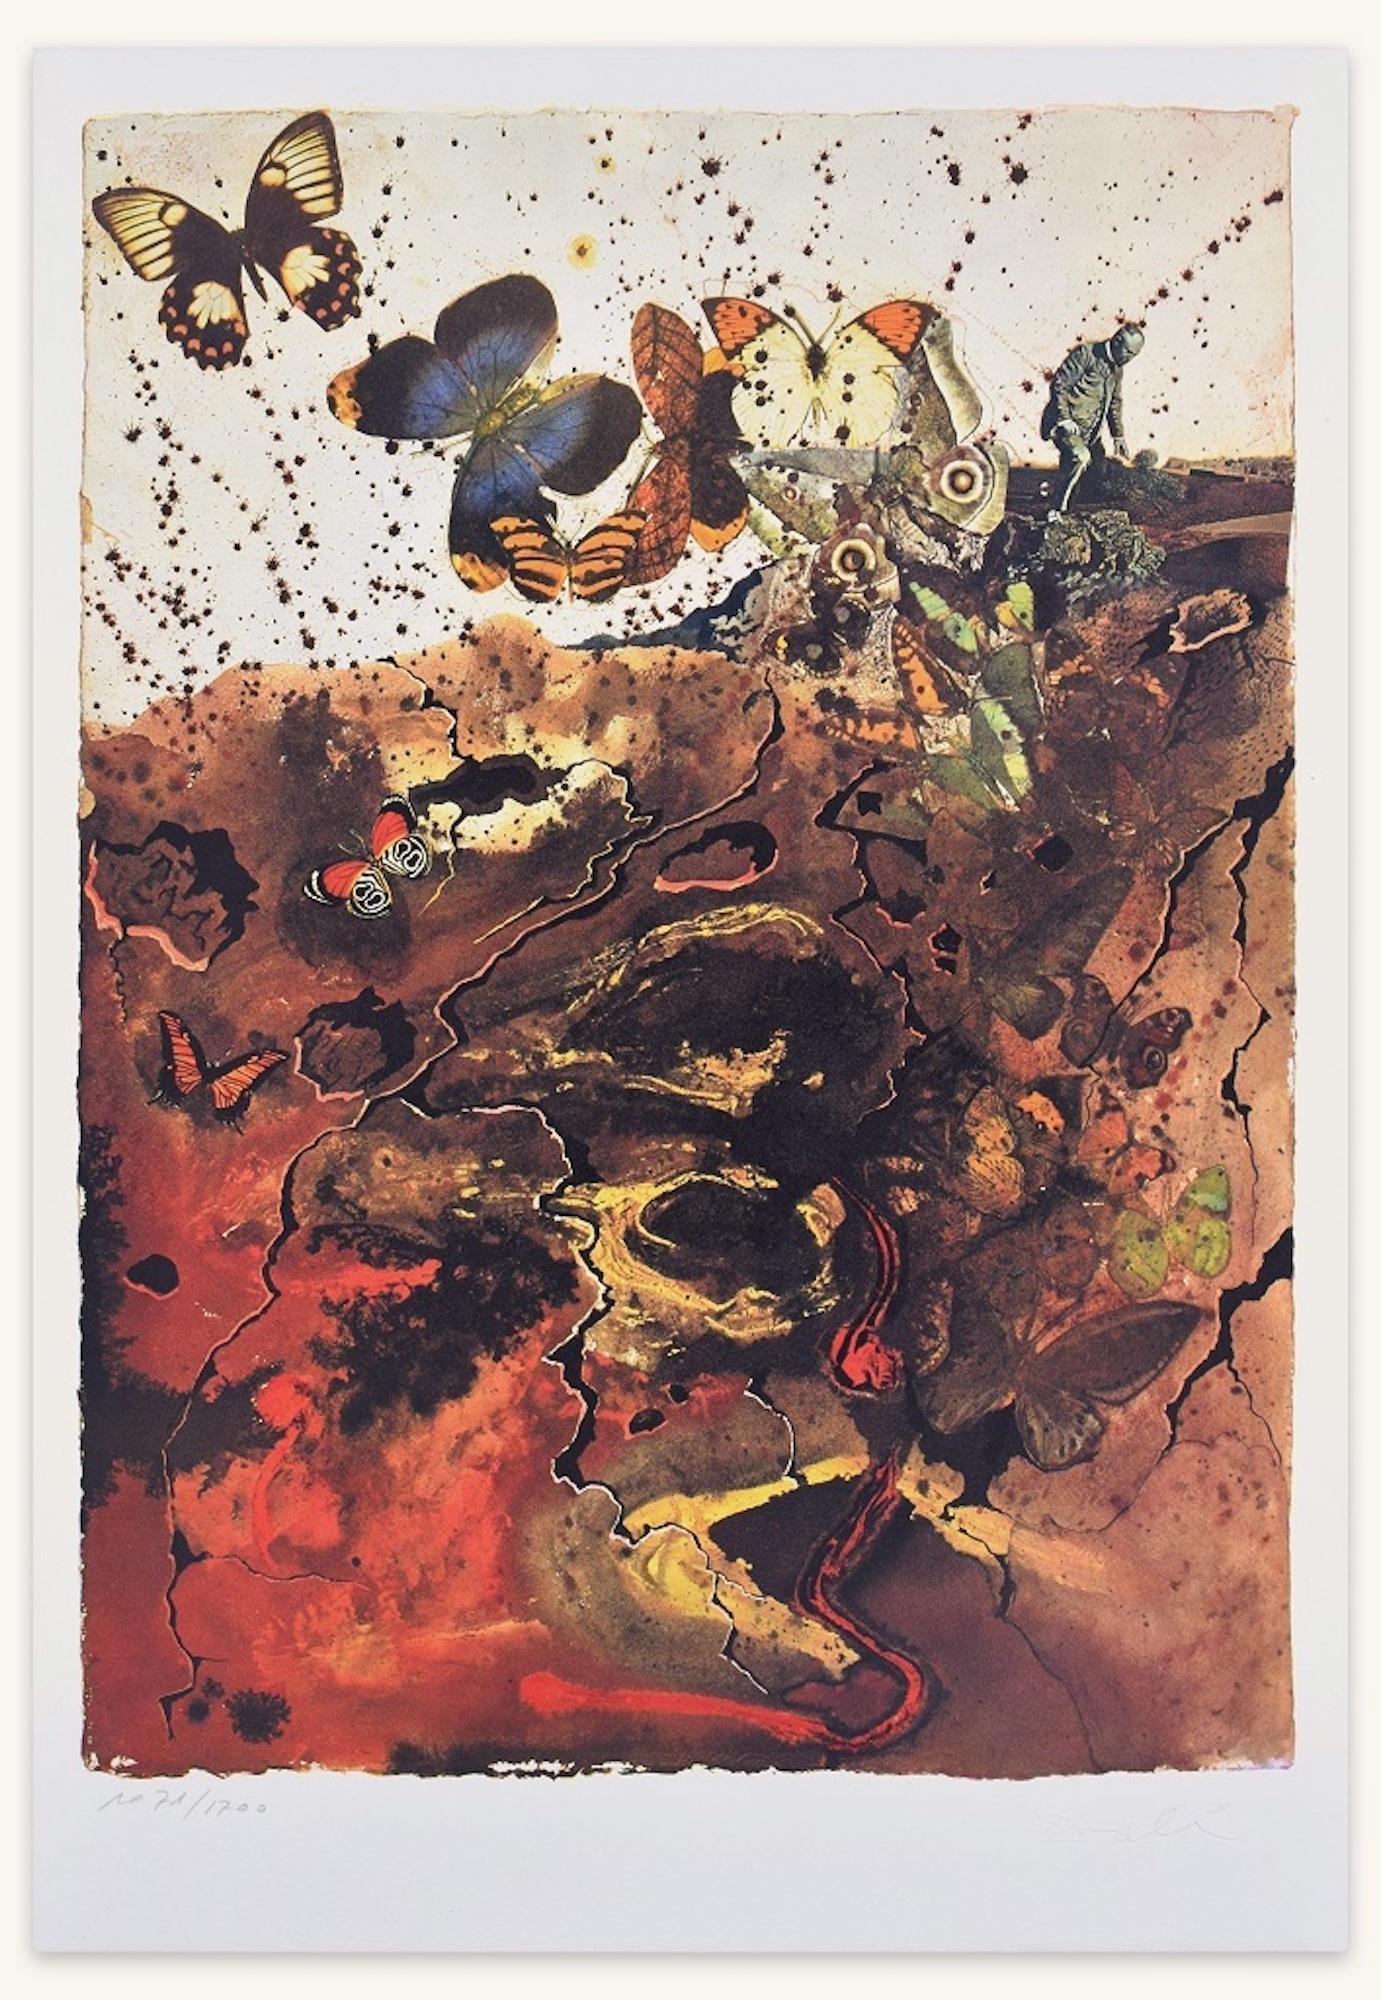 Salvador Dalí Print - Plate VI - From "Suite Papillon" - Poster - 1969